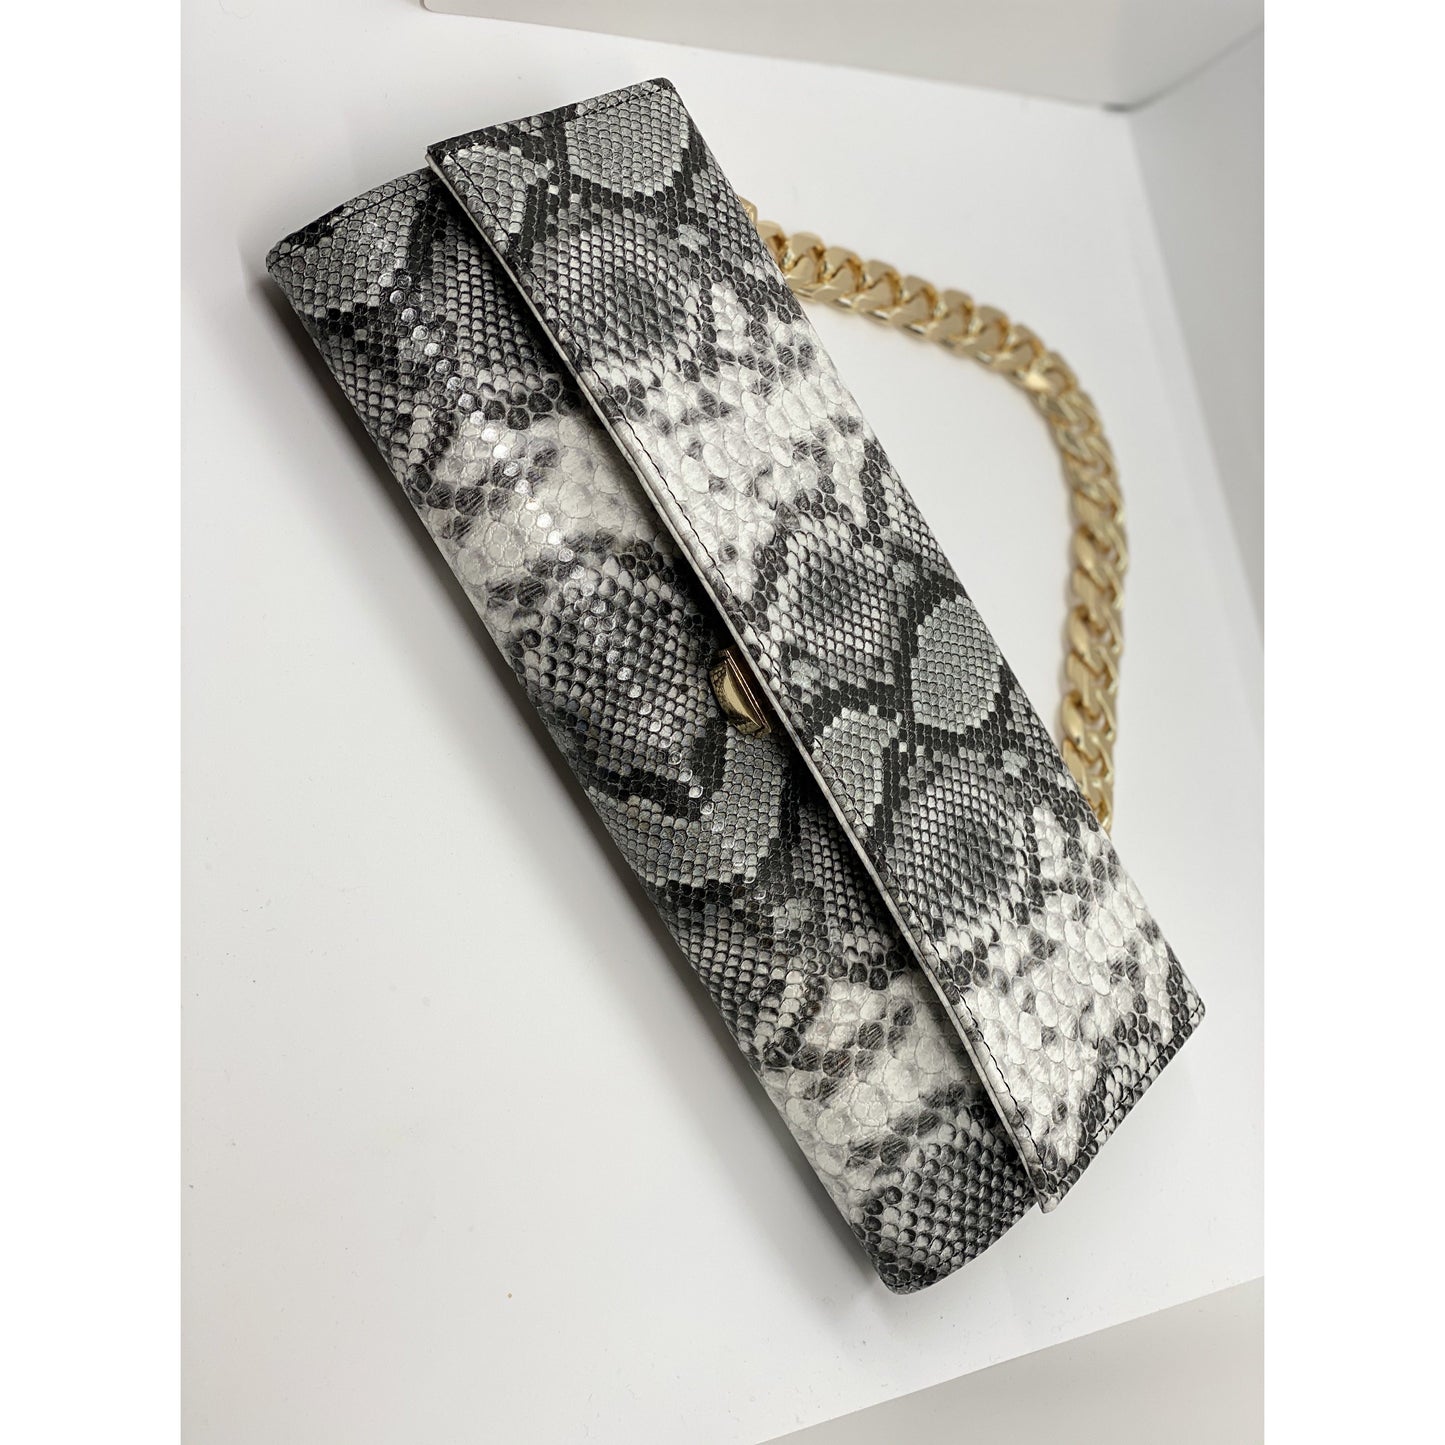 Dim Gray Snake Print Clutch Bag (Blk&White)